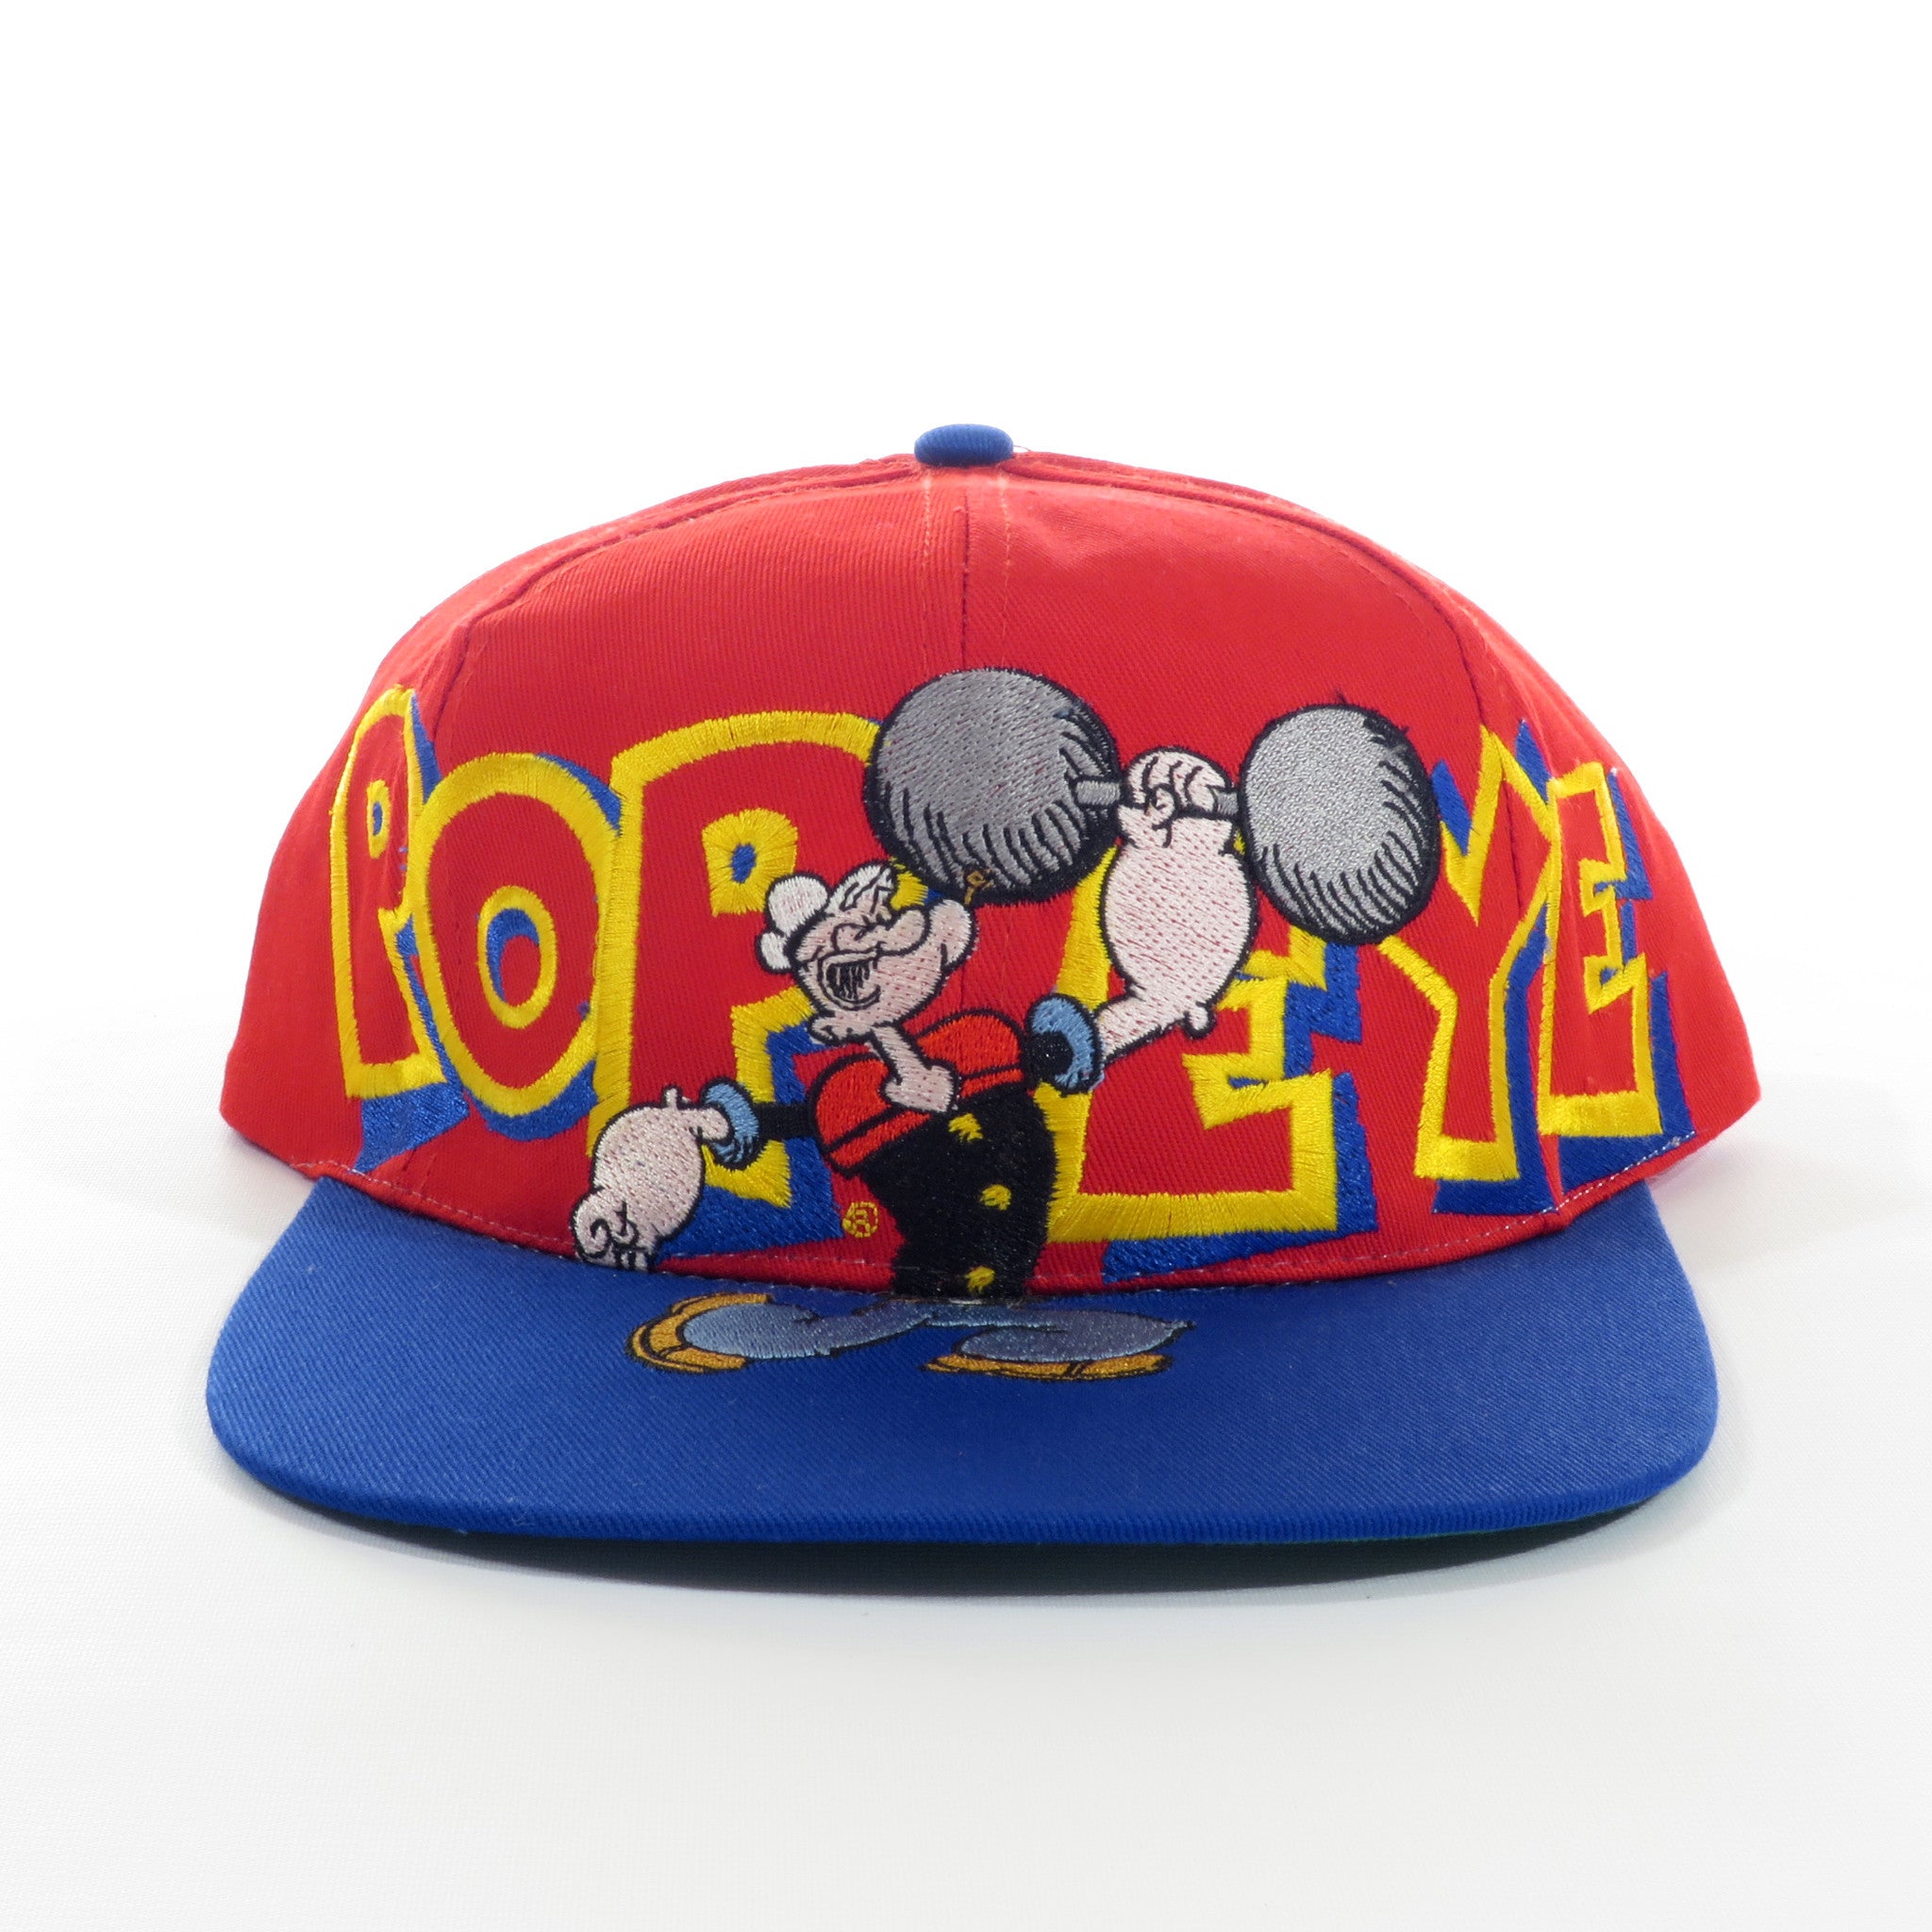 Popeye The Sailor Man Snapback Hat